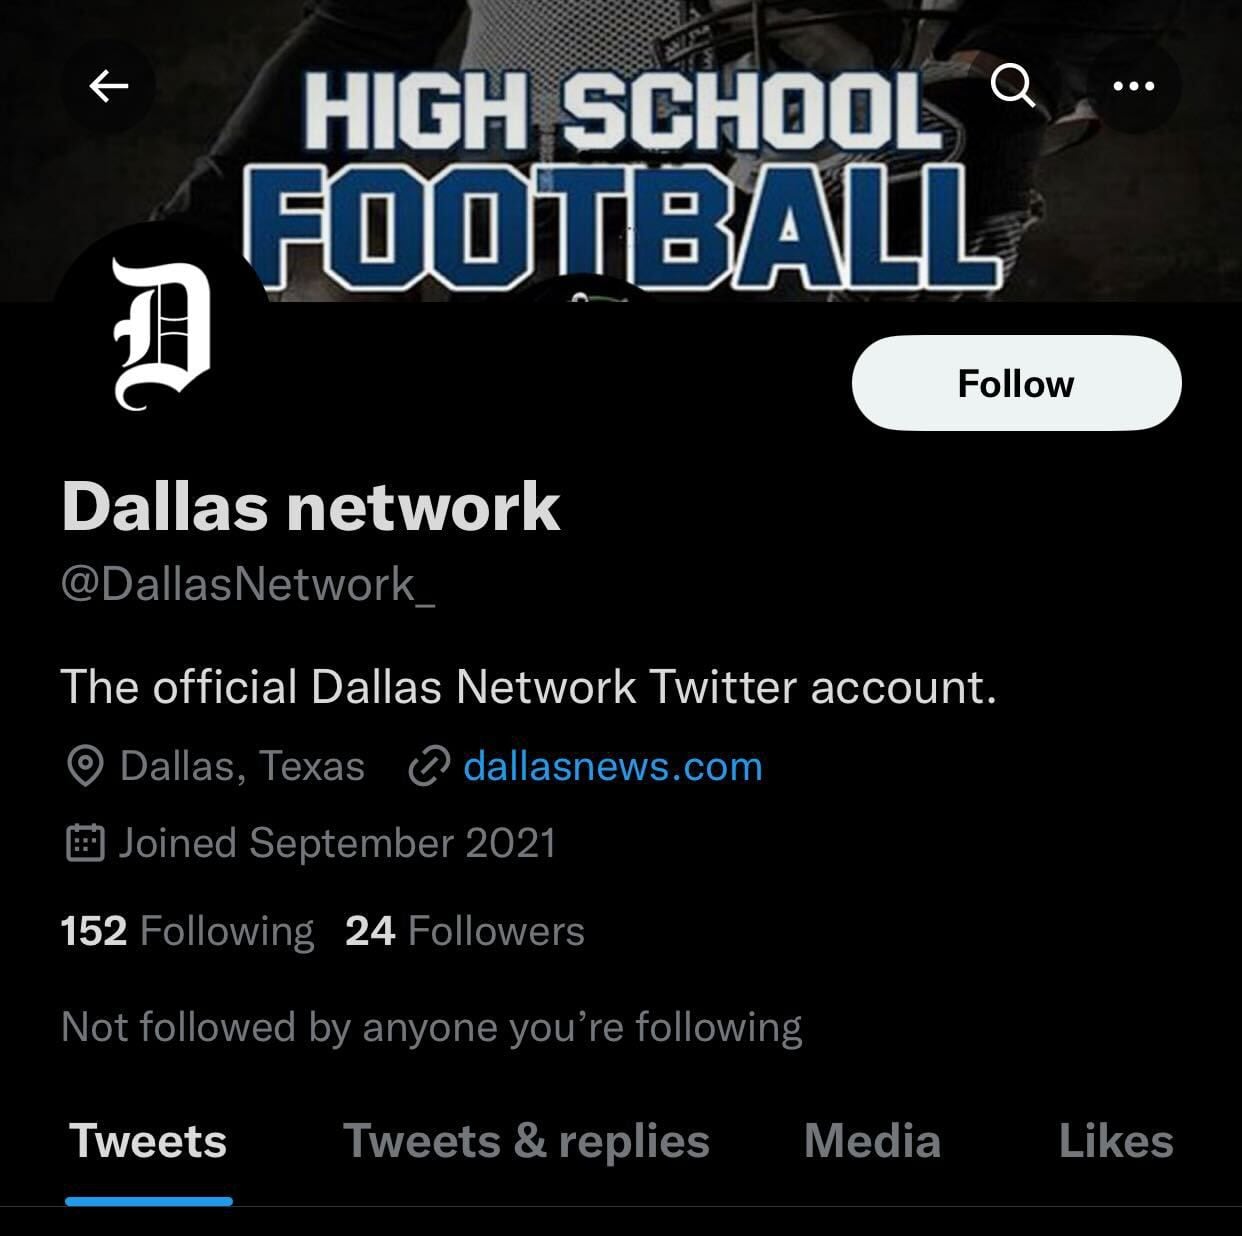 A screen shot of "Dallas network"a spam twitter account posting fraudulent high school messages...